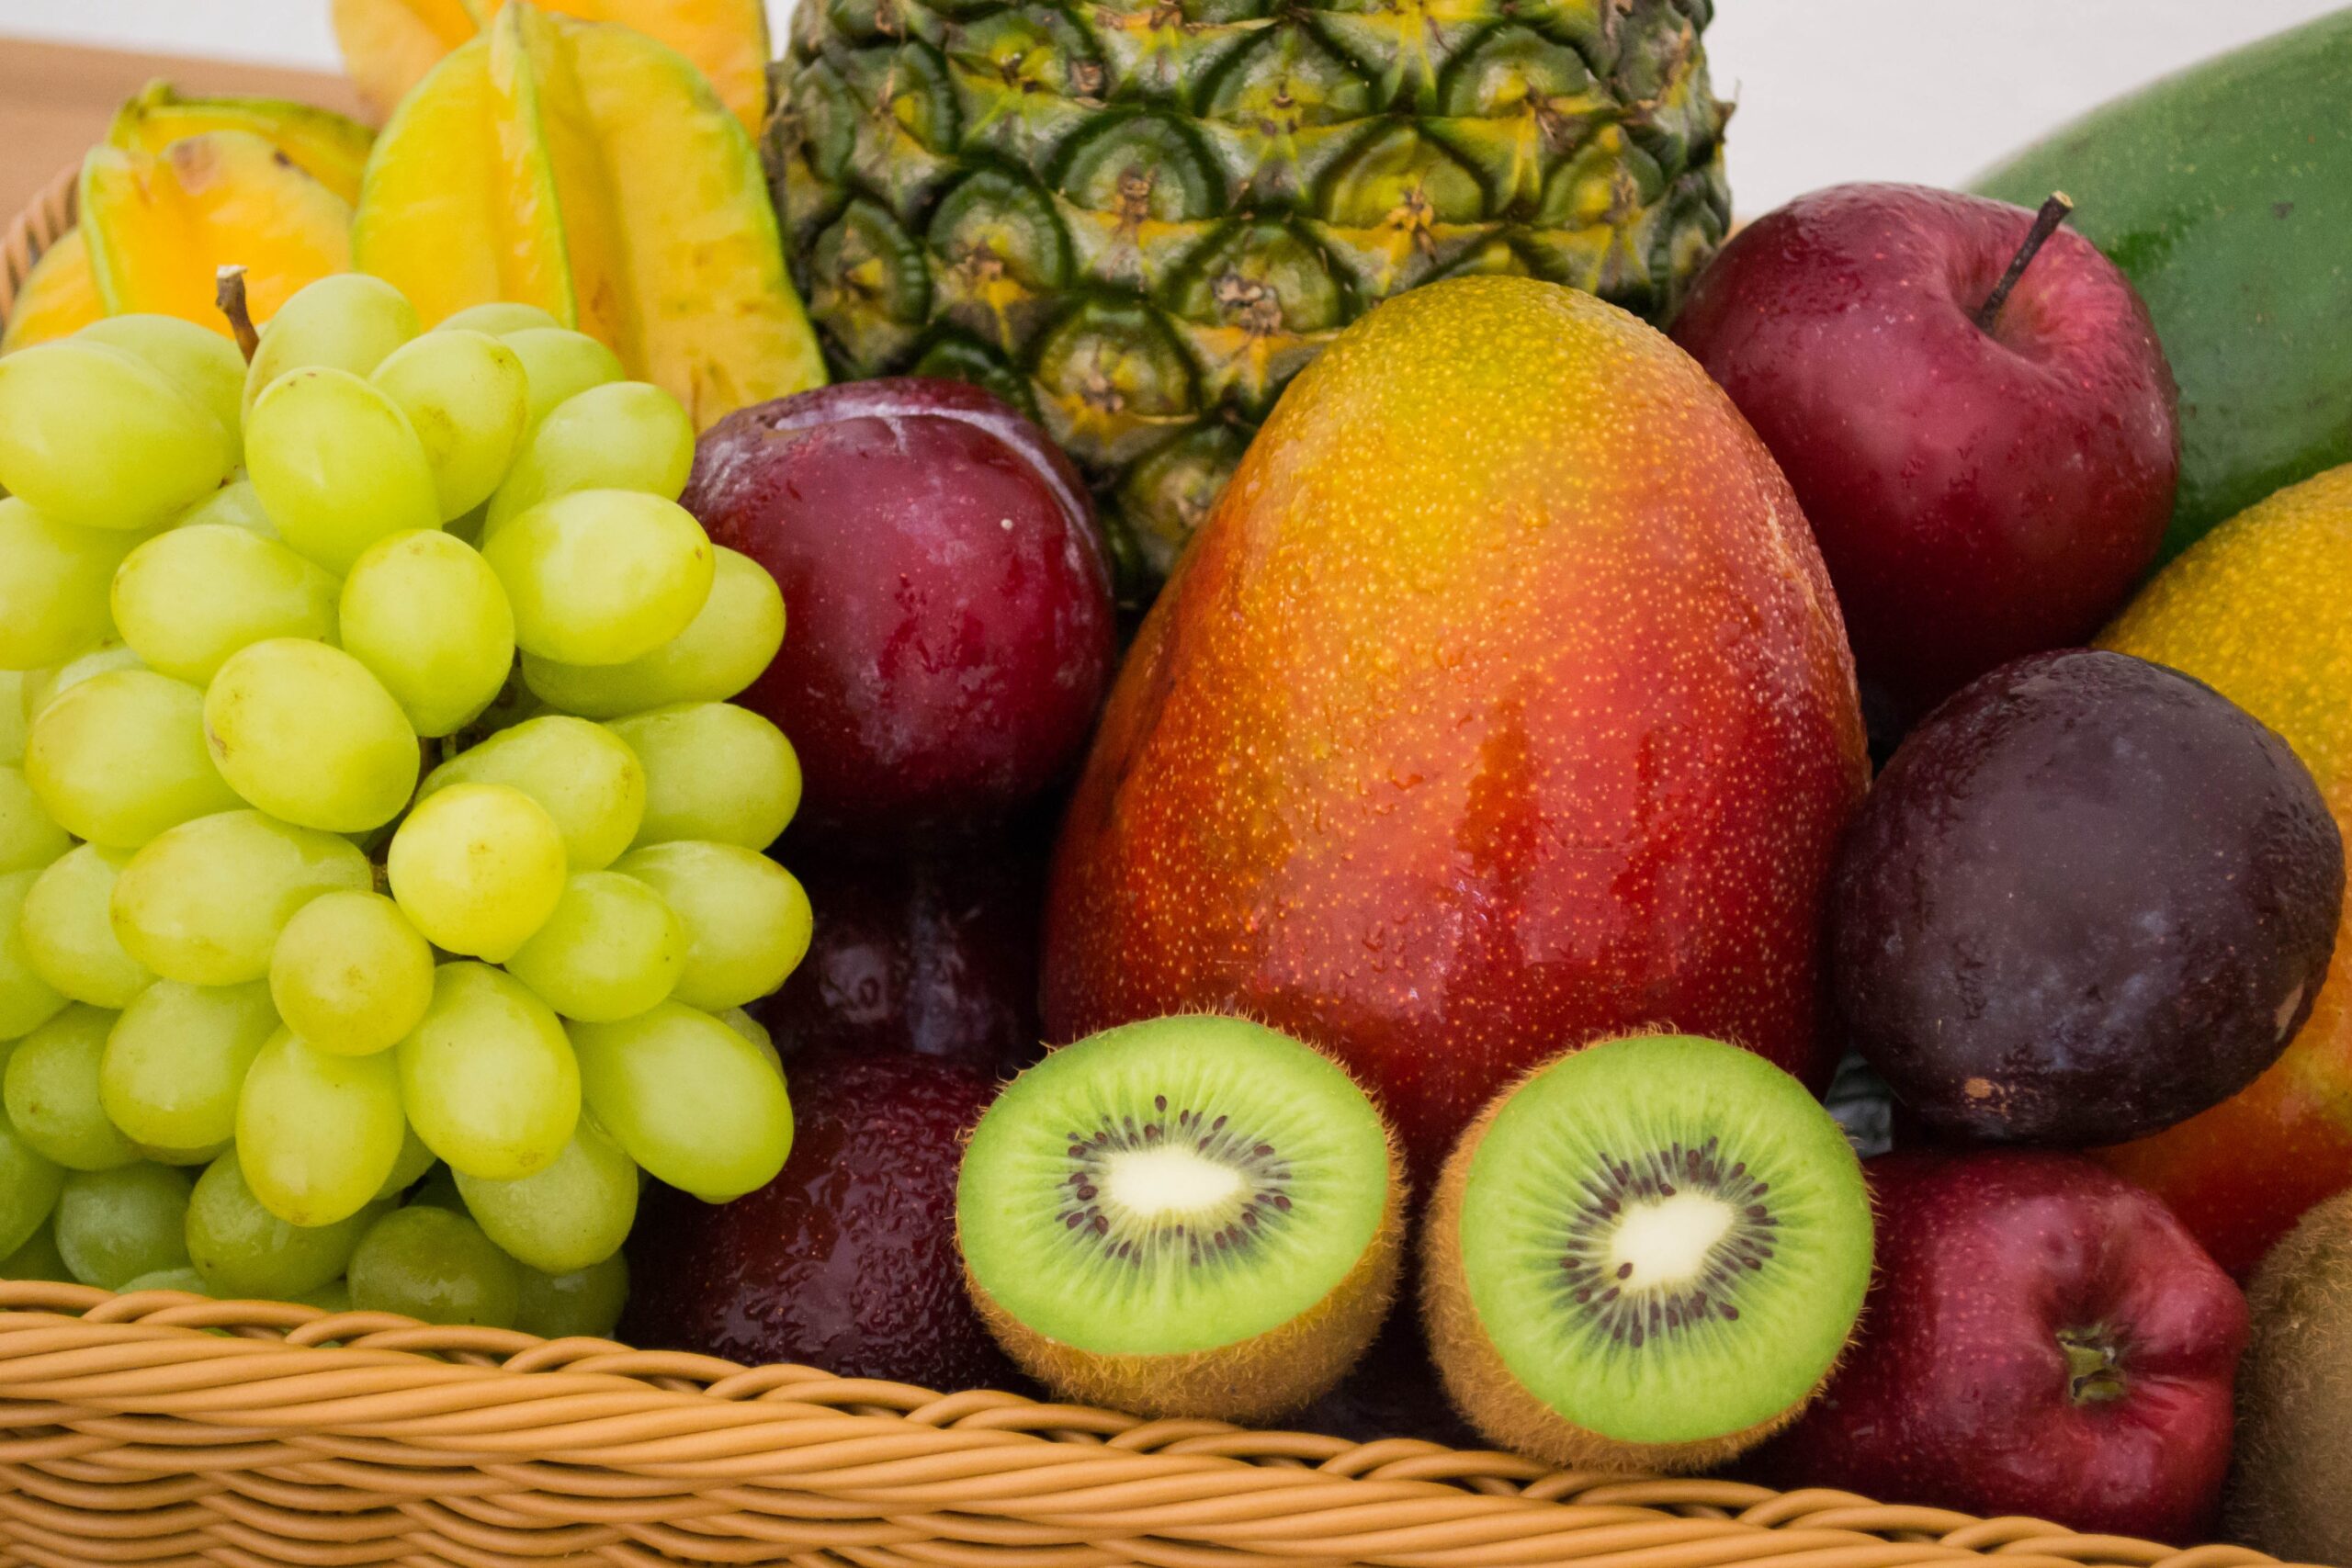 penderita diabetes jangan khawatir, buah ini aman dikonsumsi